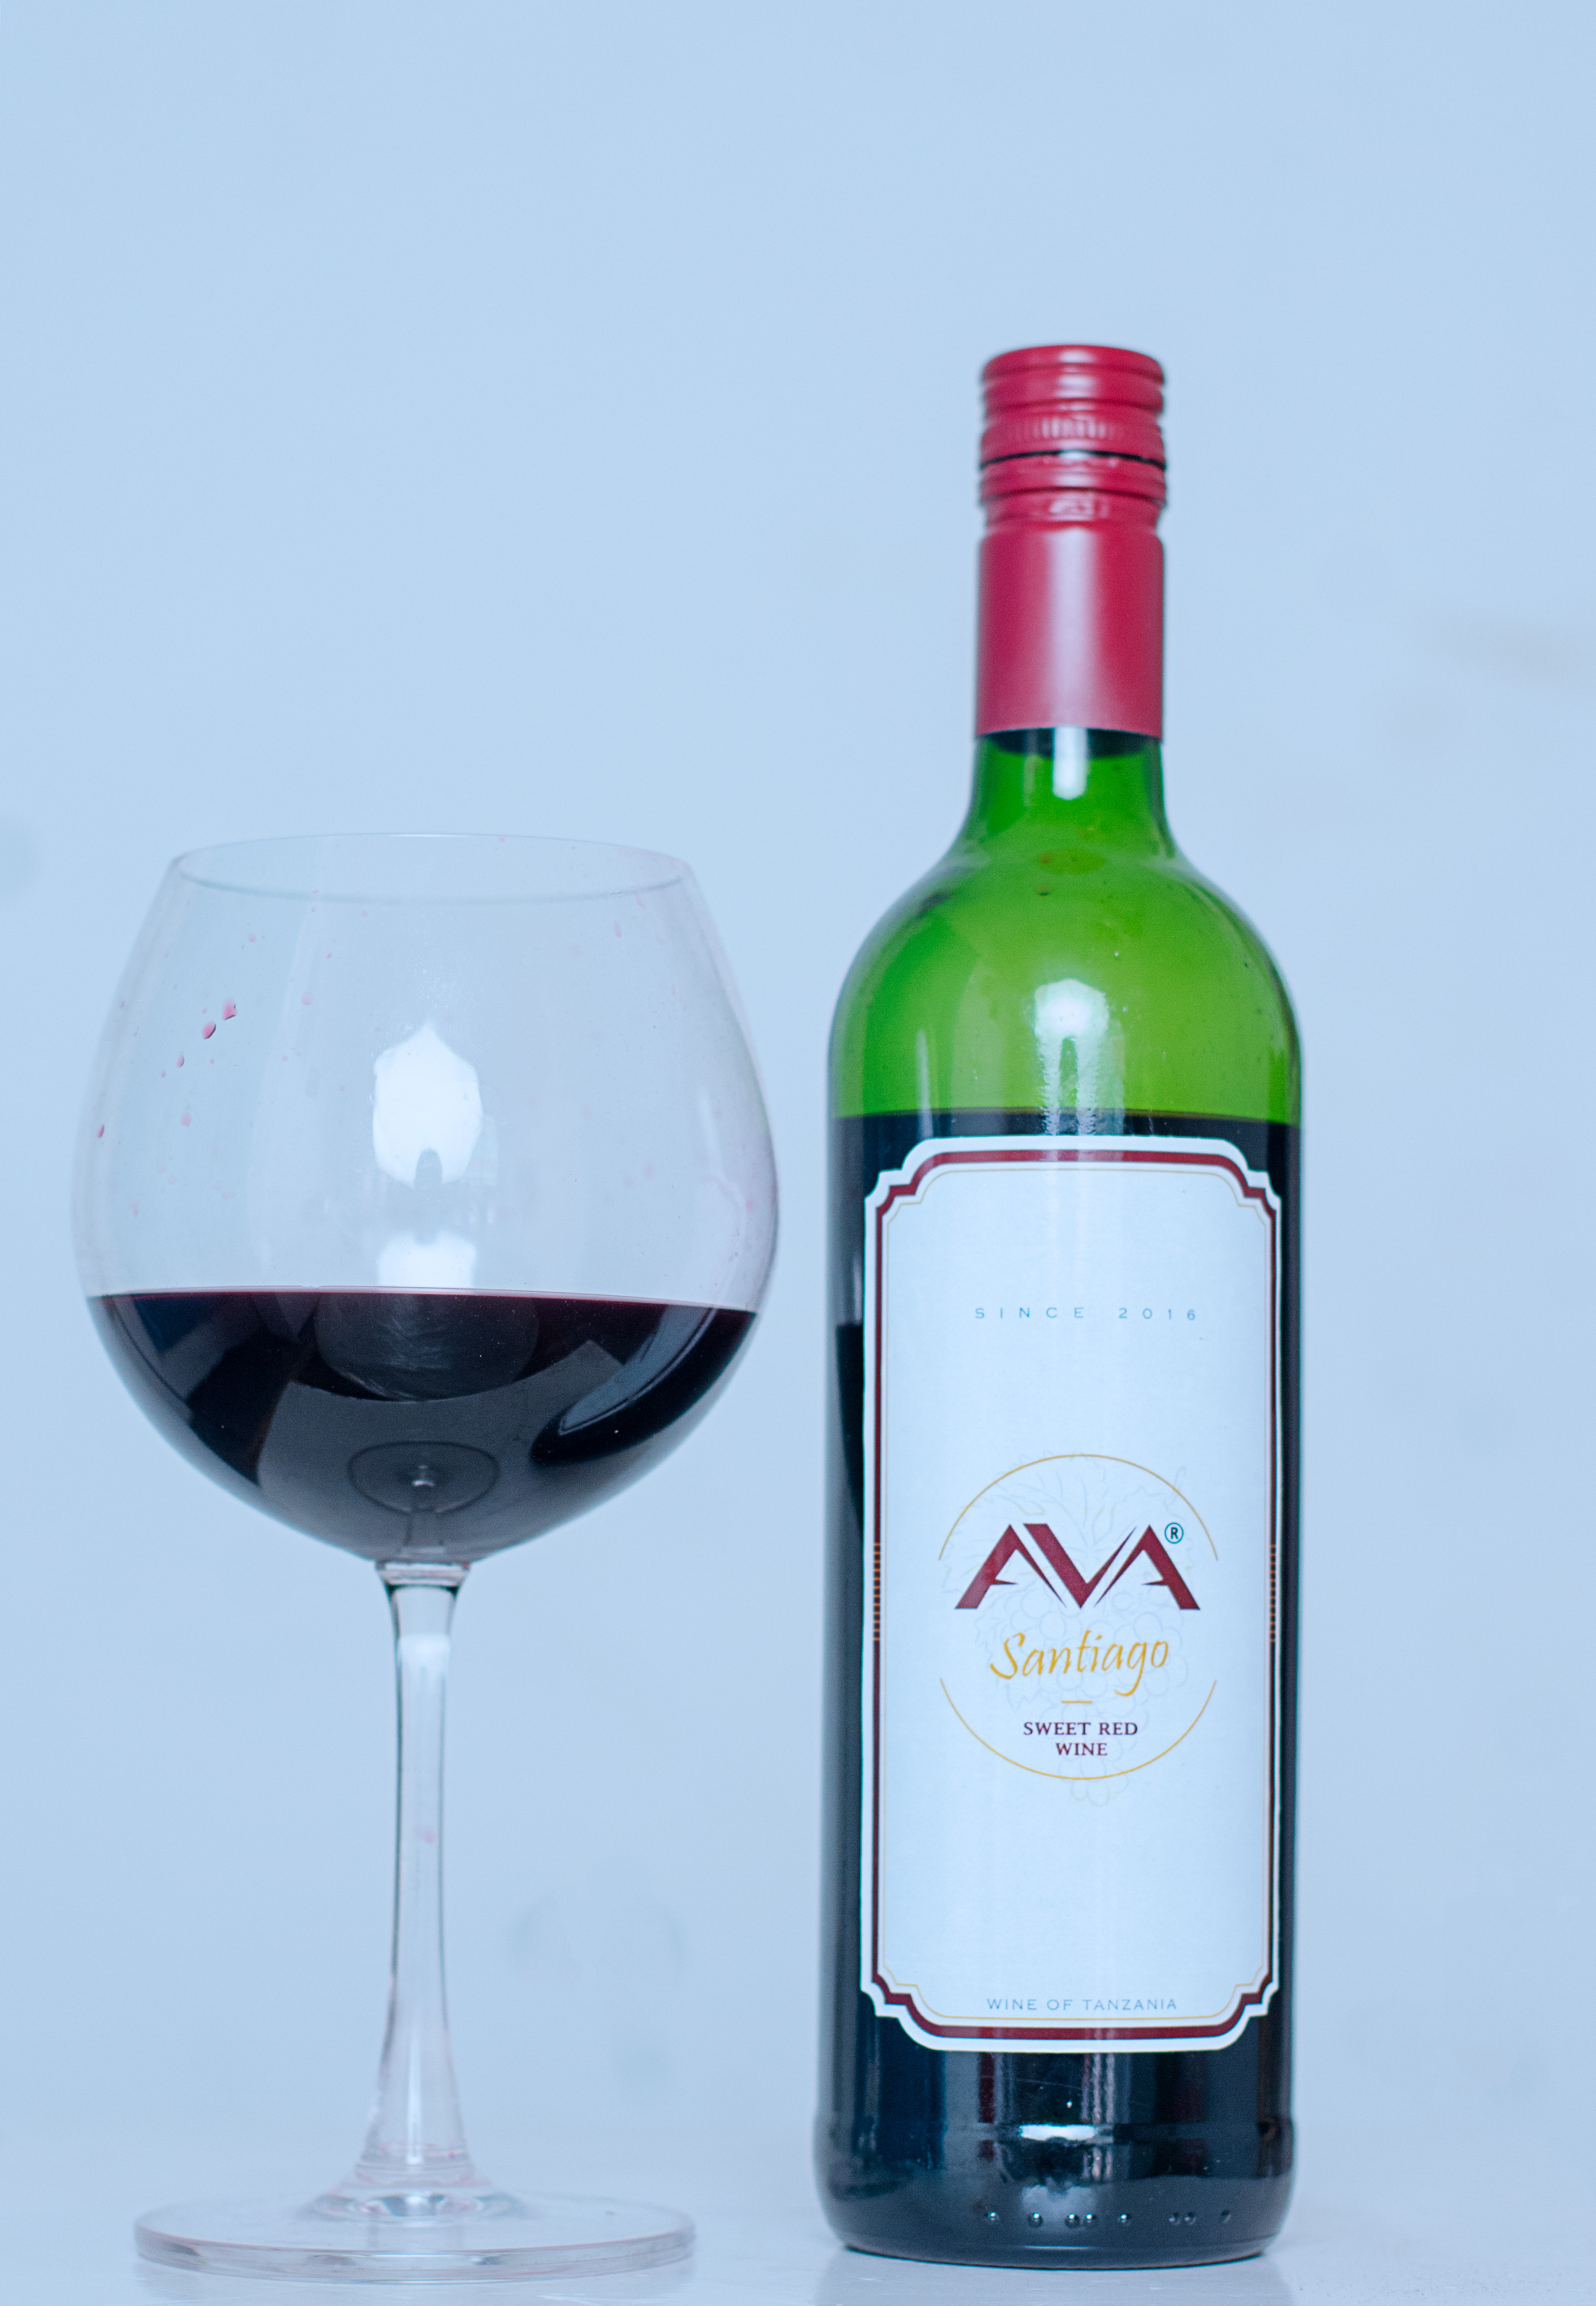 New Product in the Market......Ava Santiago Grape Wine!